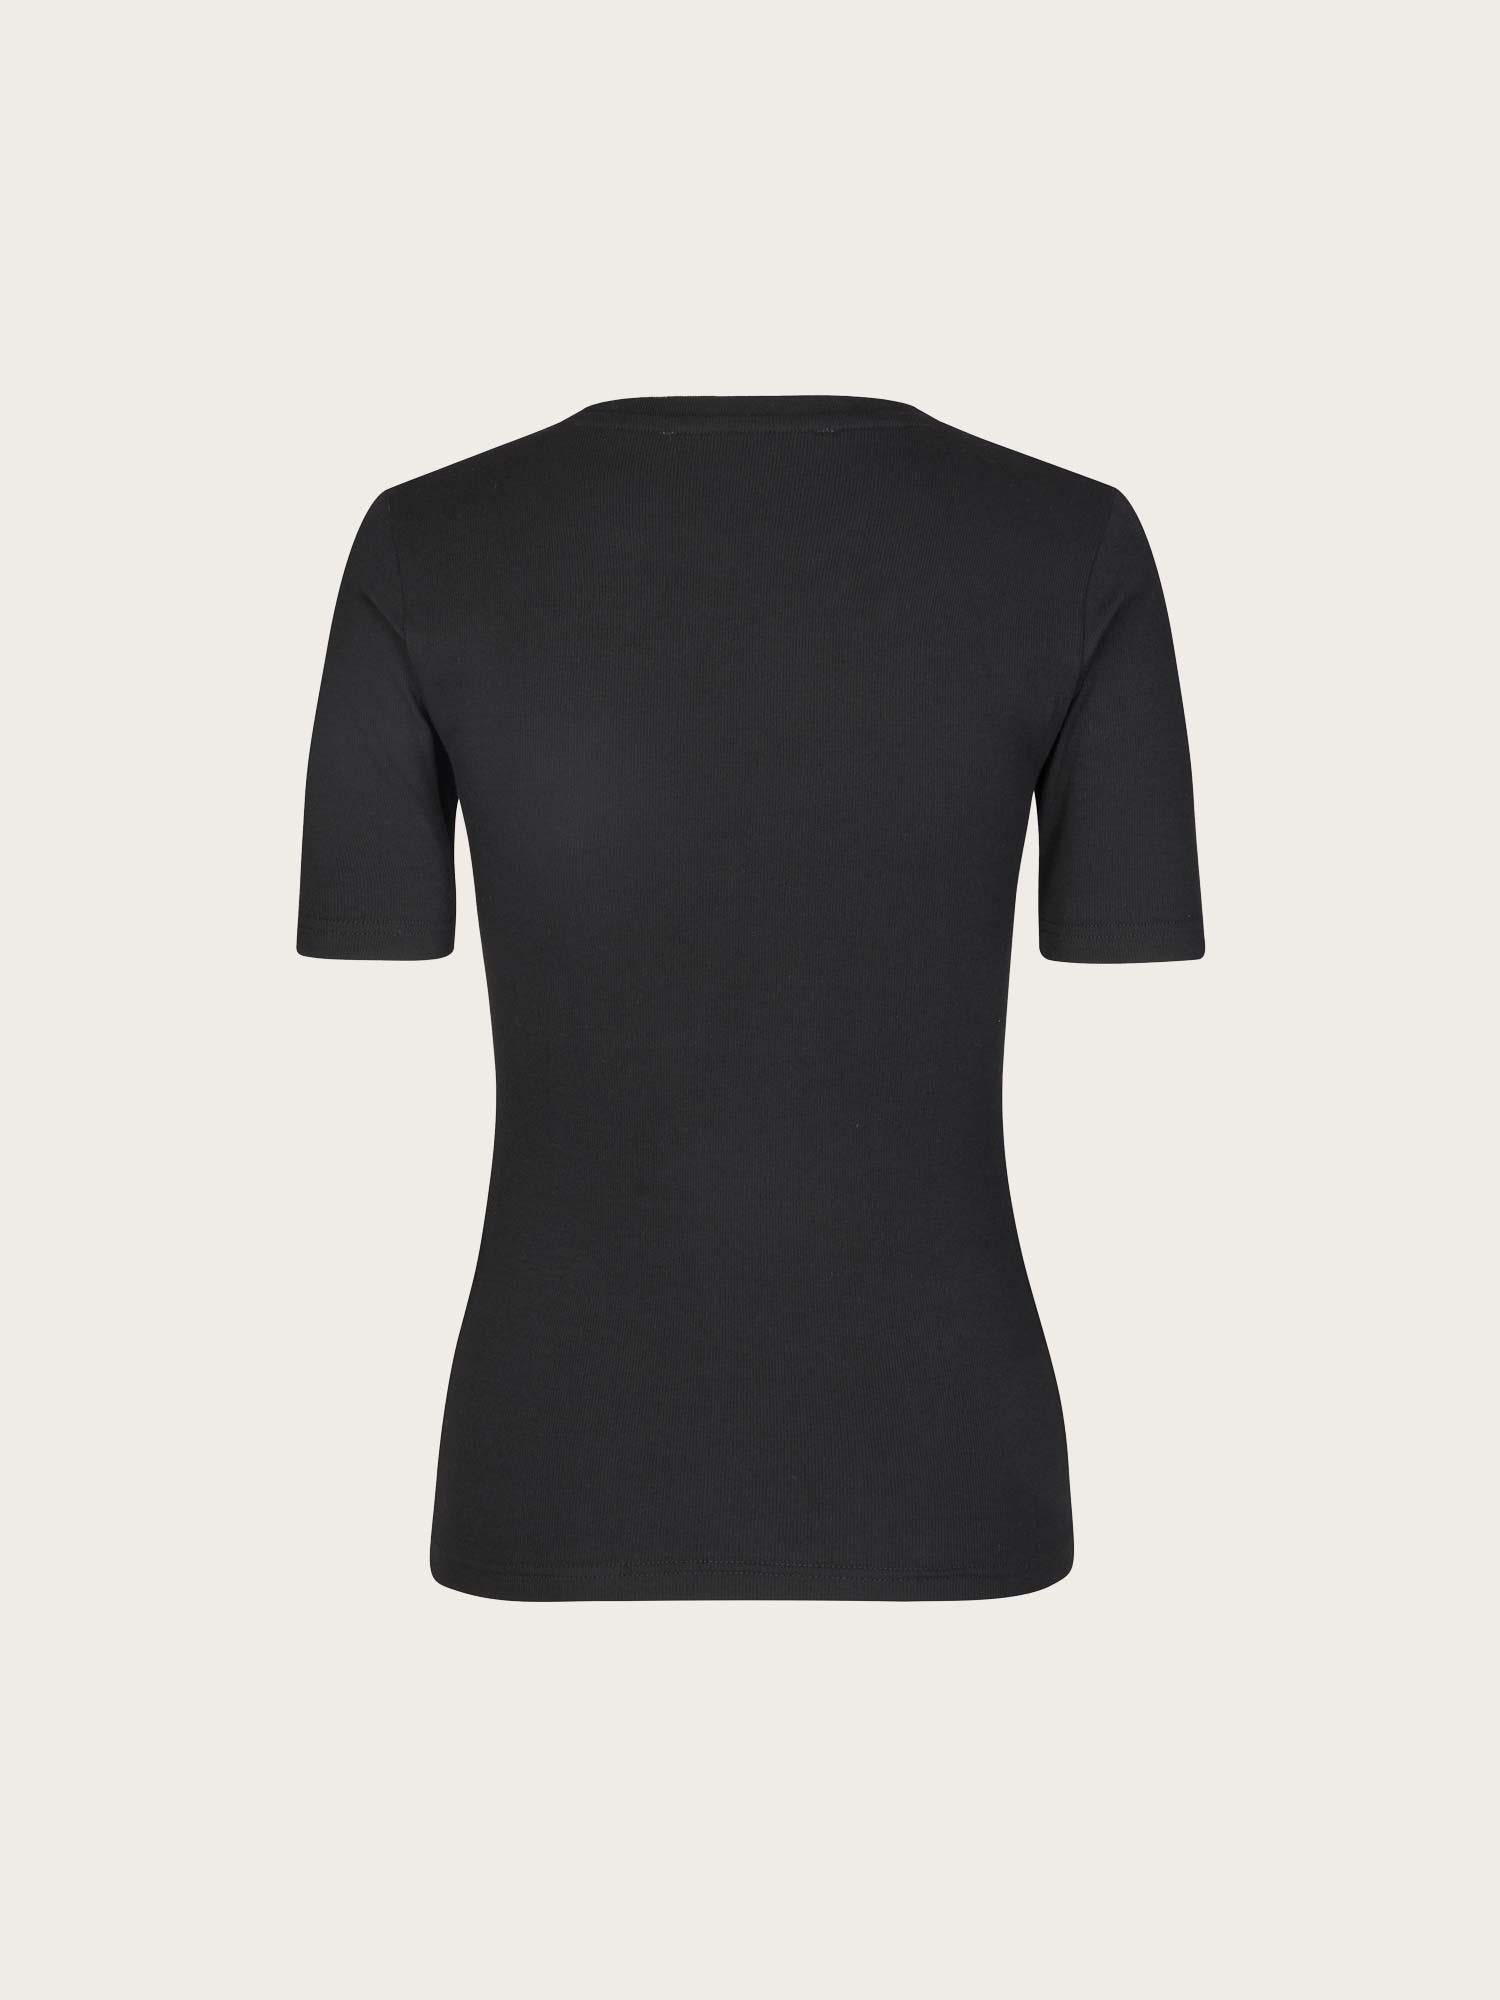 Saalexo T-Shirt - Black